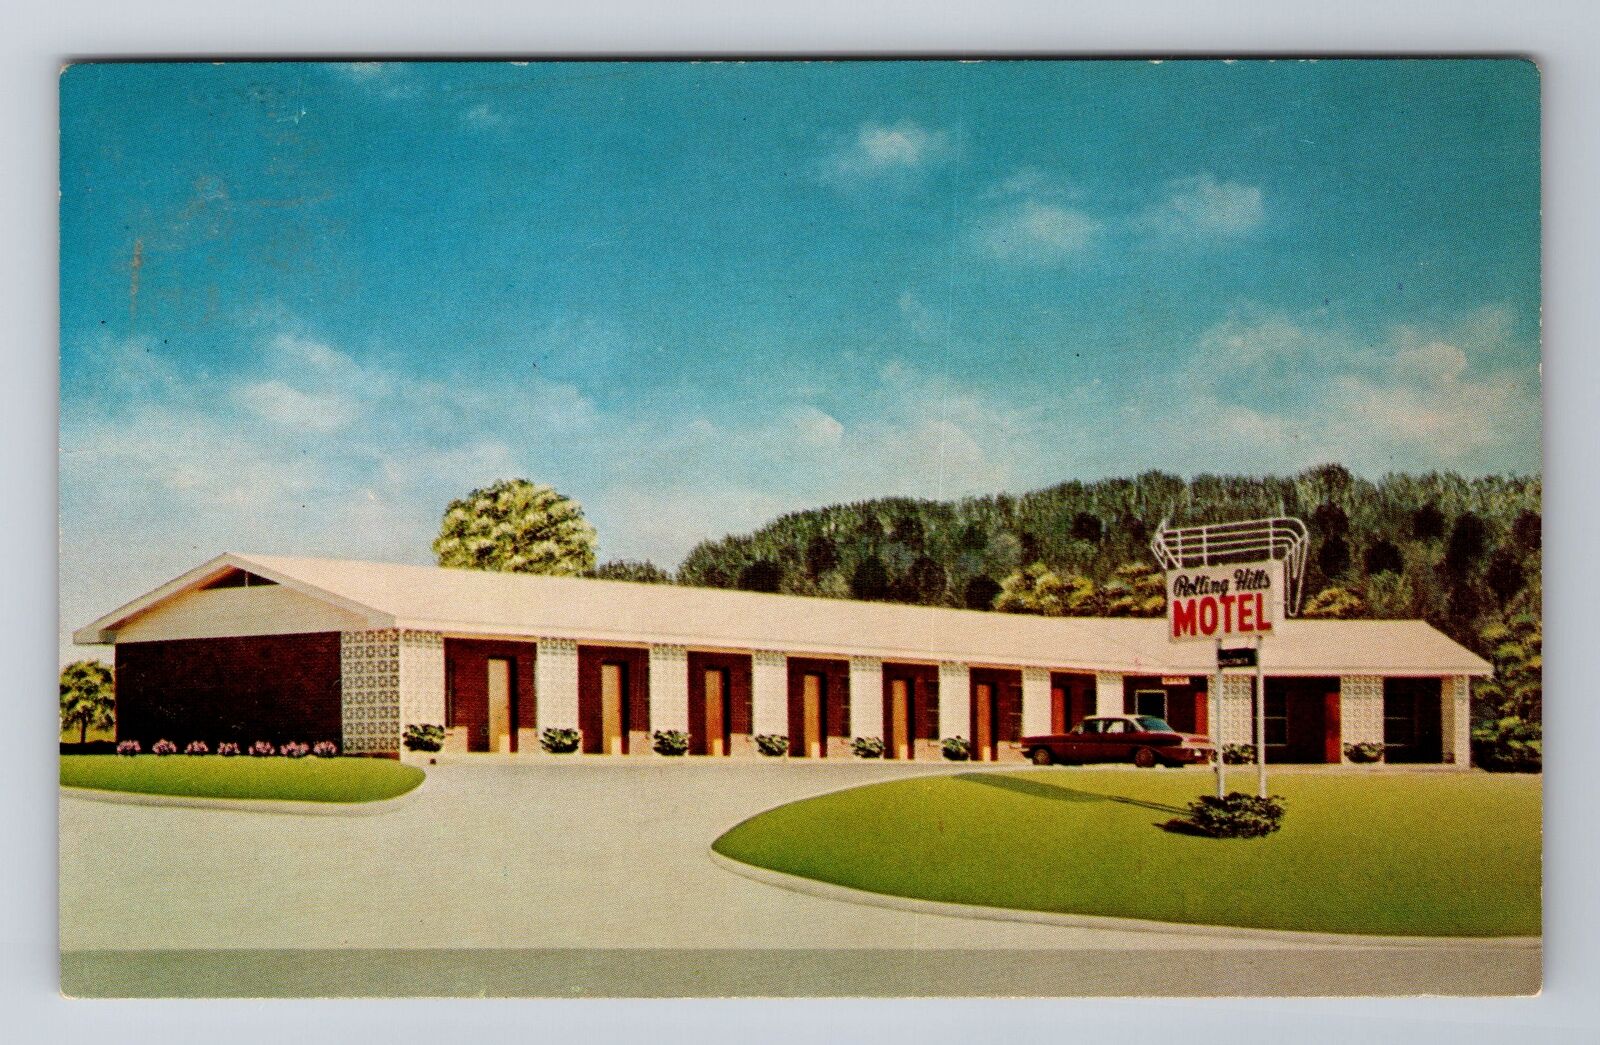 Hardy AR-Arkansas, Rolling Hills Motel, Advertising, Vintage Souvenir Postcard